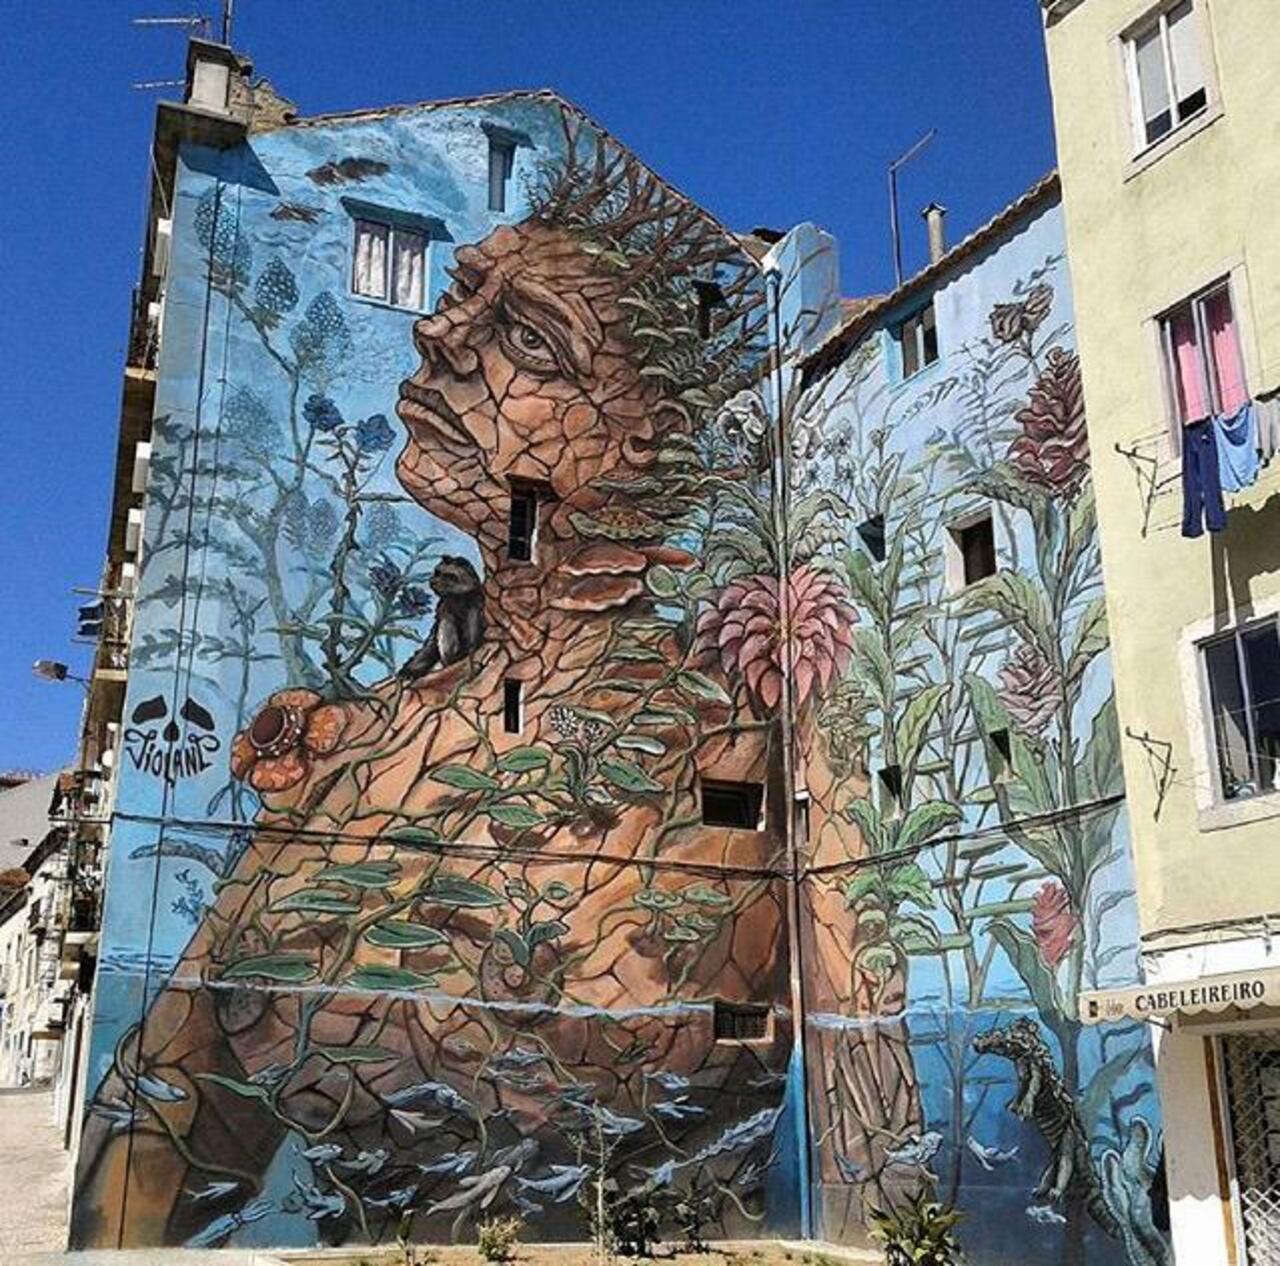 Street Art by Violant 

#art #graffiti #mural #streetart http://t.co/fIWbEST5OI